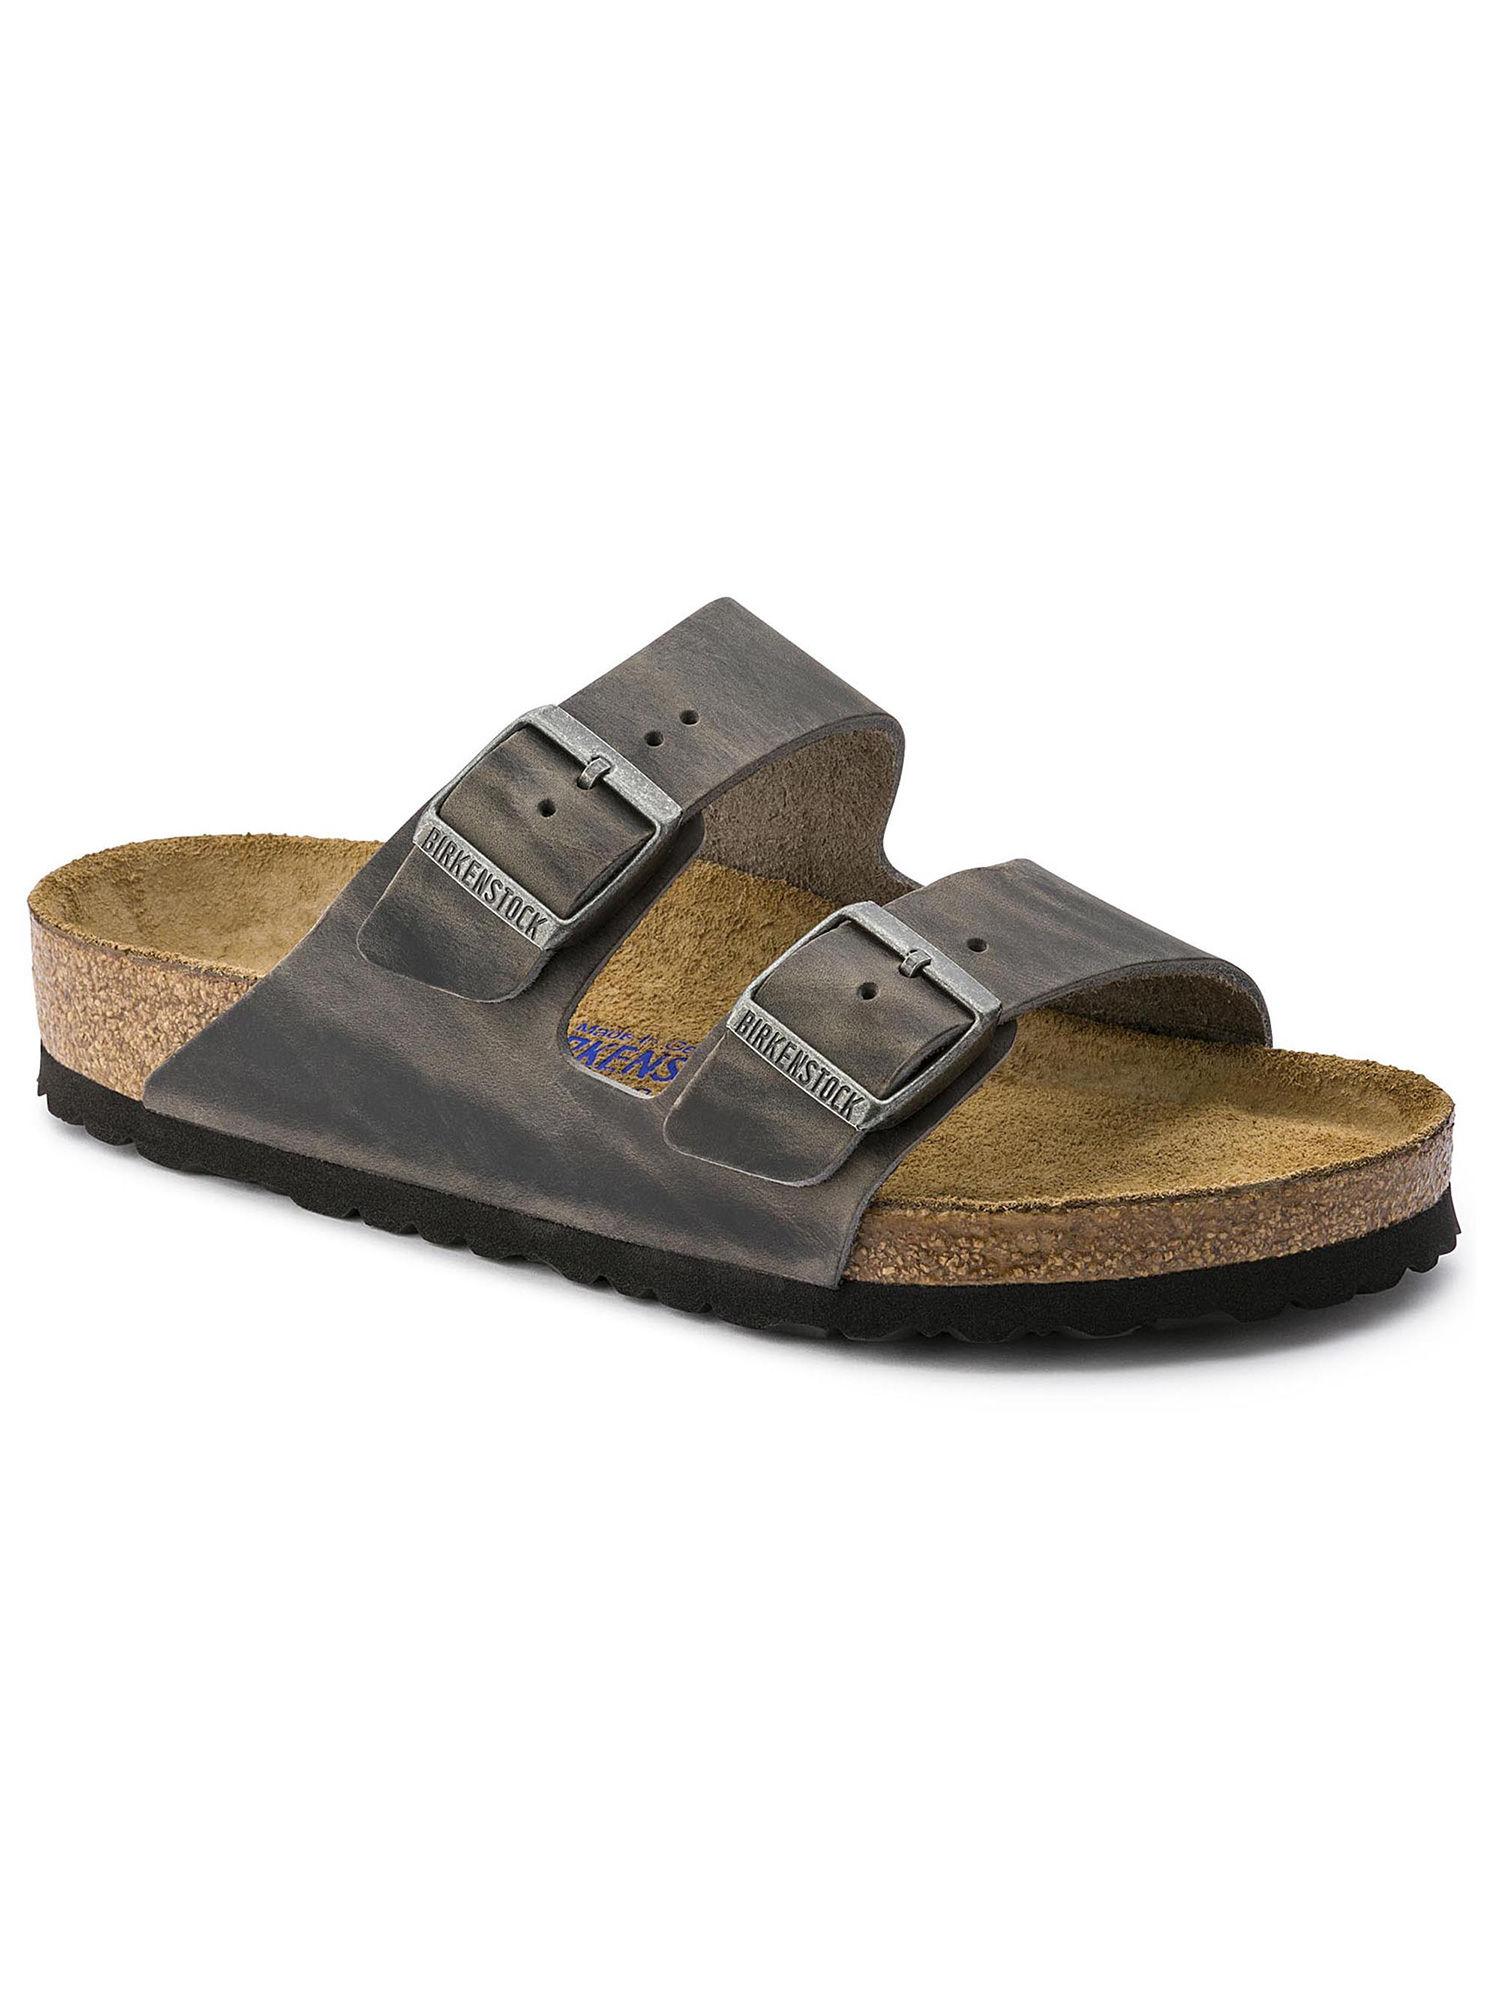 arizona-soft-footbed-oiled-leather-grey-regular-width-unisex-sandals